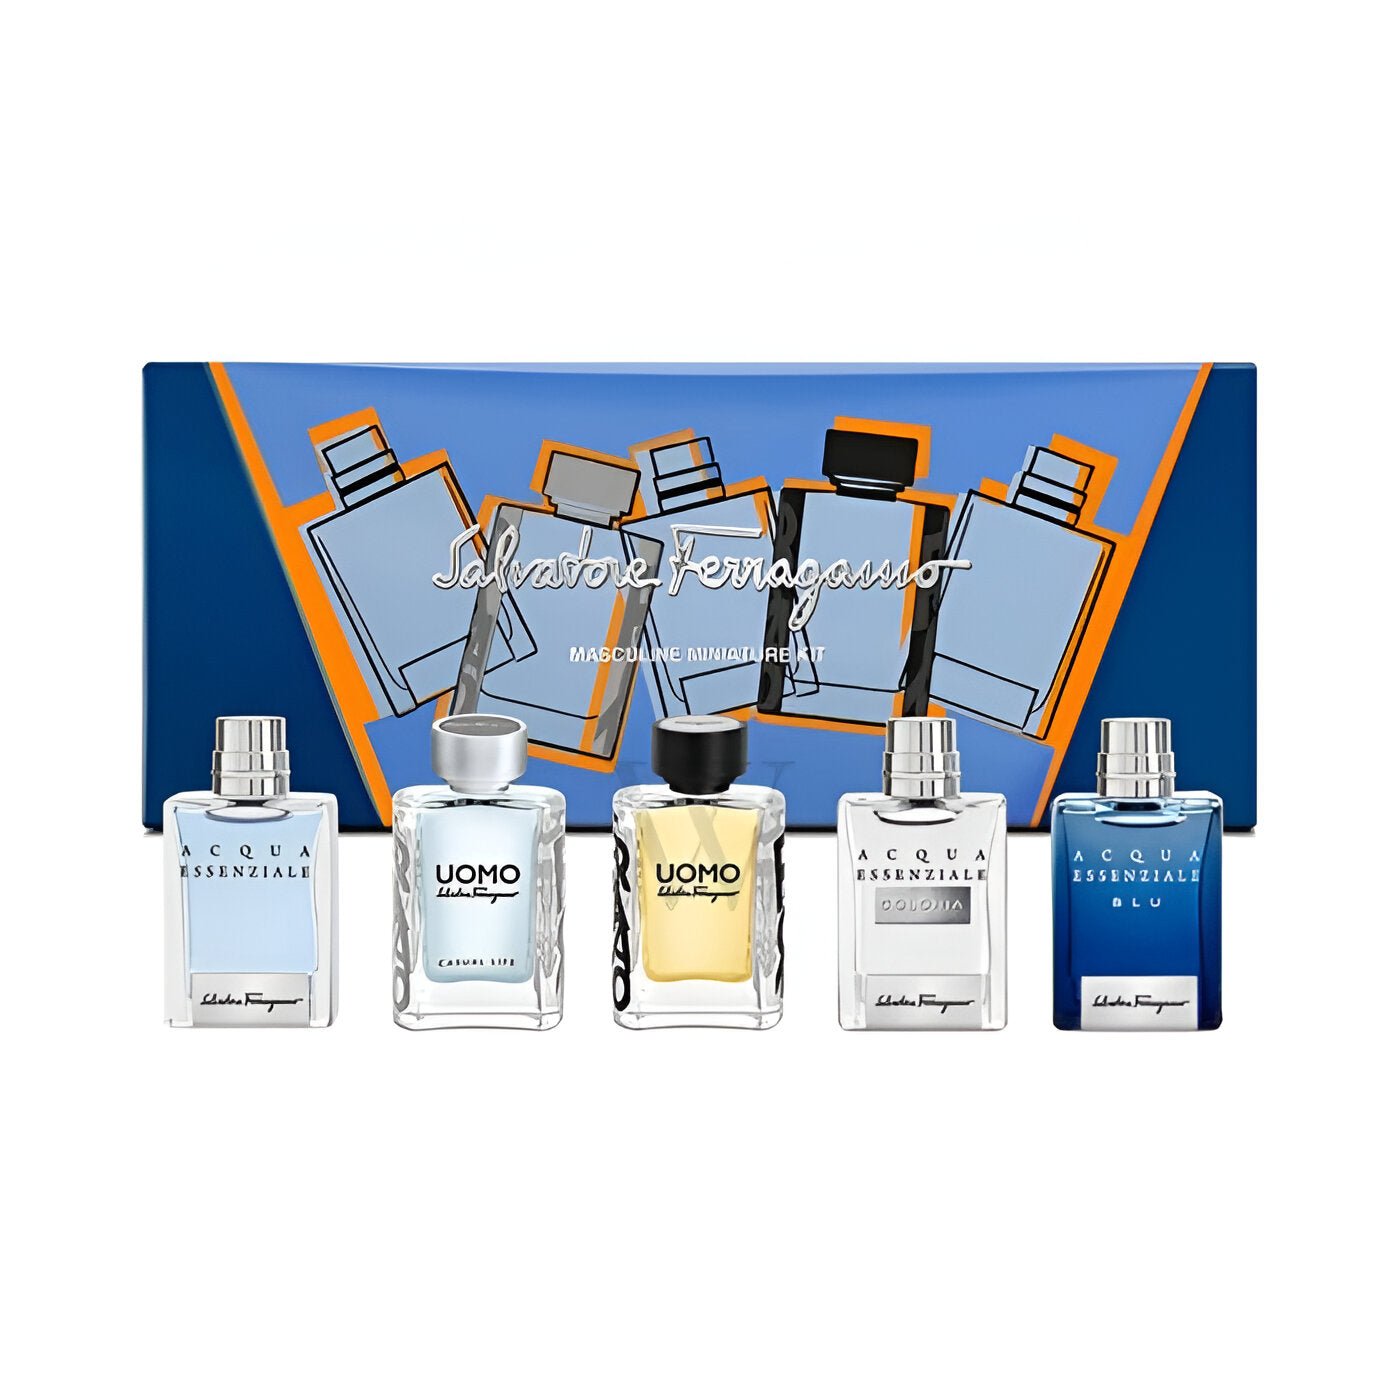 Salvatore Ferragamo Men's Essential Miniature EDT Collection | My Perfume Shop Australia